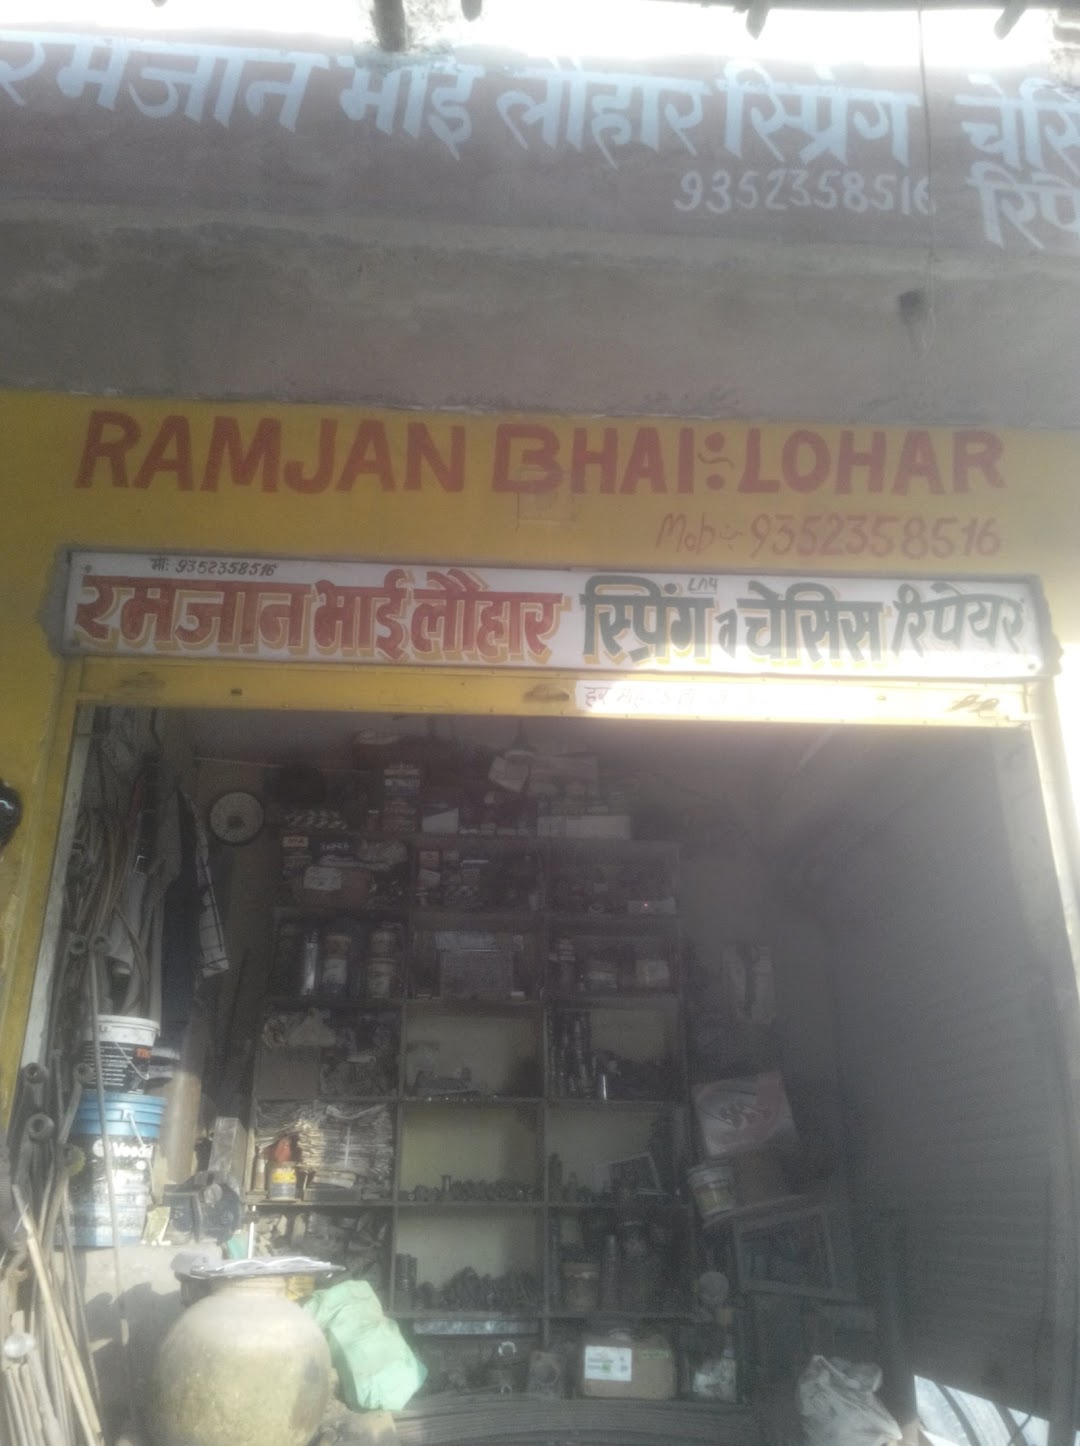 Ramzan Bhai Lohar Spring & Chassis Repair